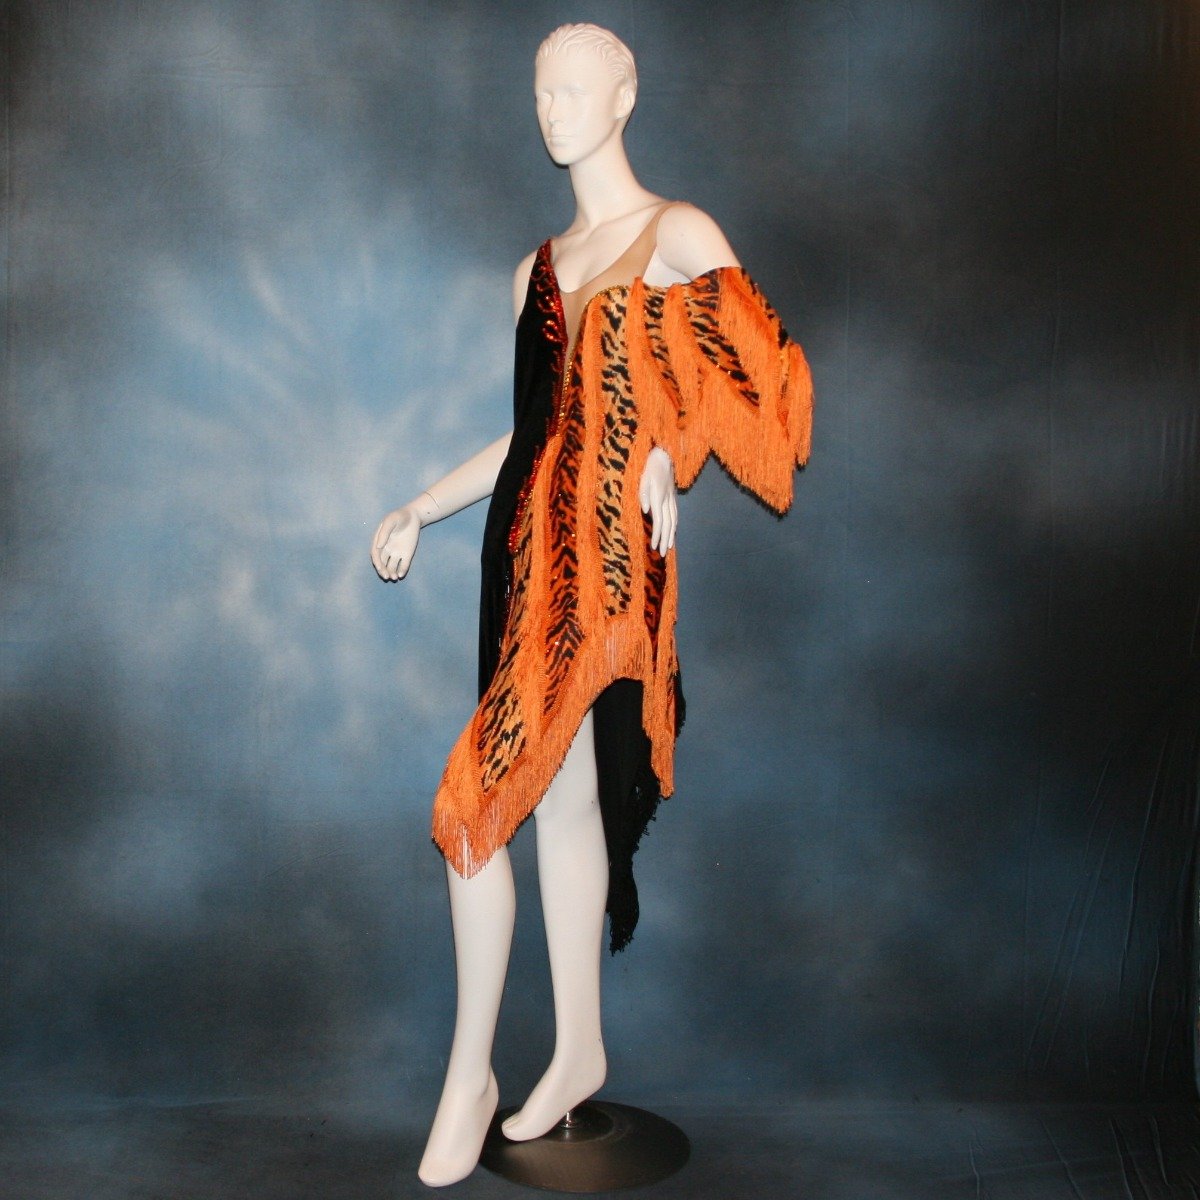 Crystal's Creations side view of orange & black tiger print Latin/rhythm dress with fringe